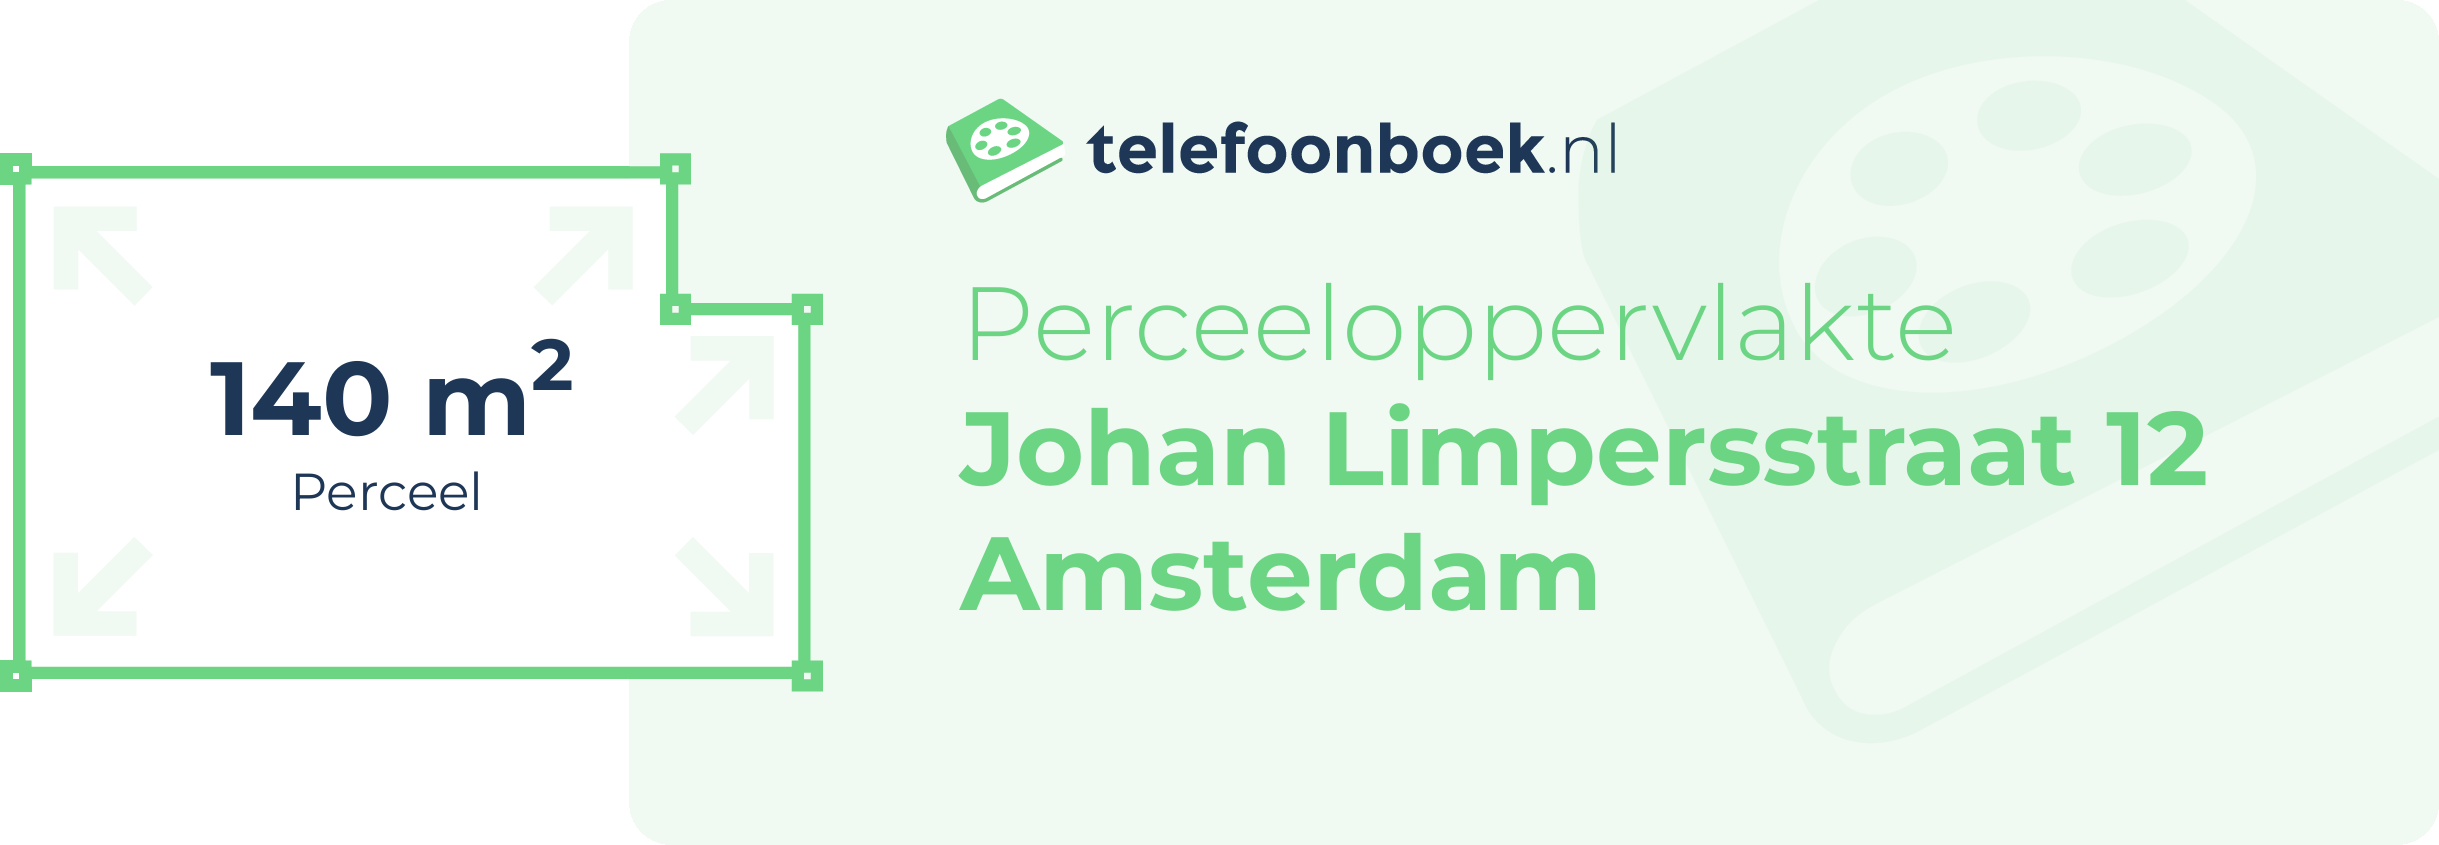 Perceeloppervlakte Johan Limpersstraat 12 Amsterdam